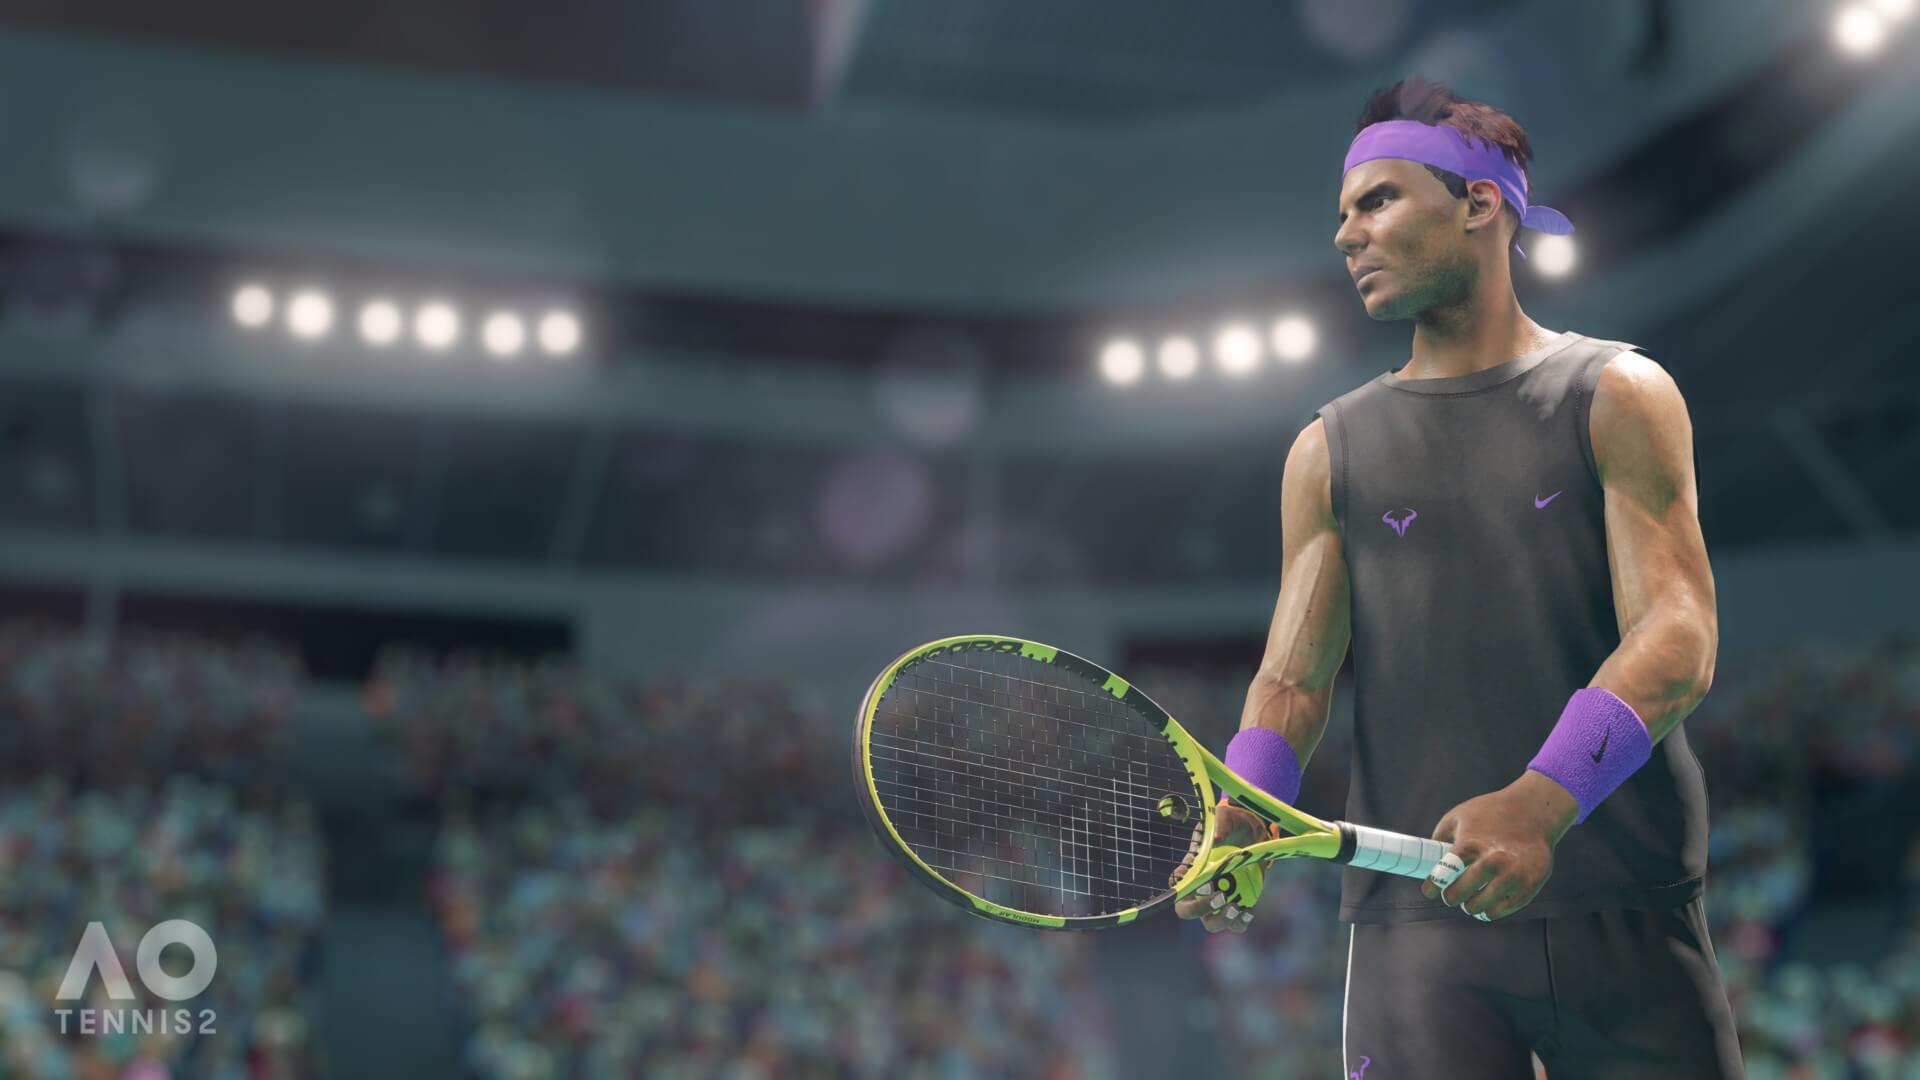 Ao Tennis 2 Reveal Screenshot 2